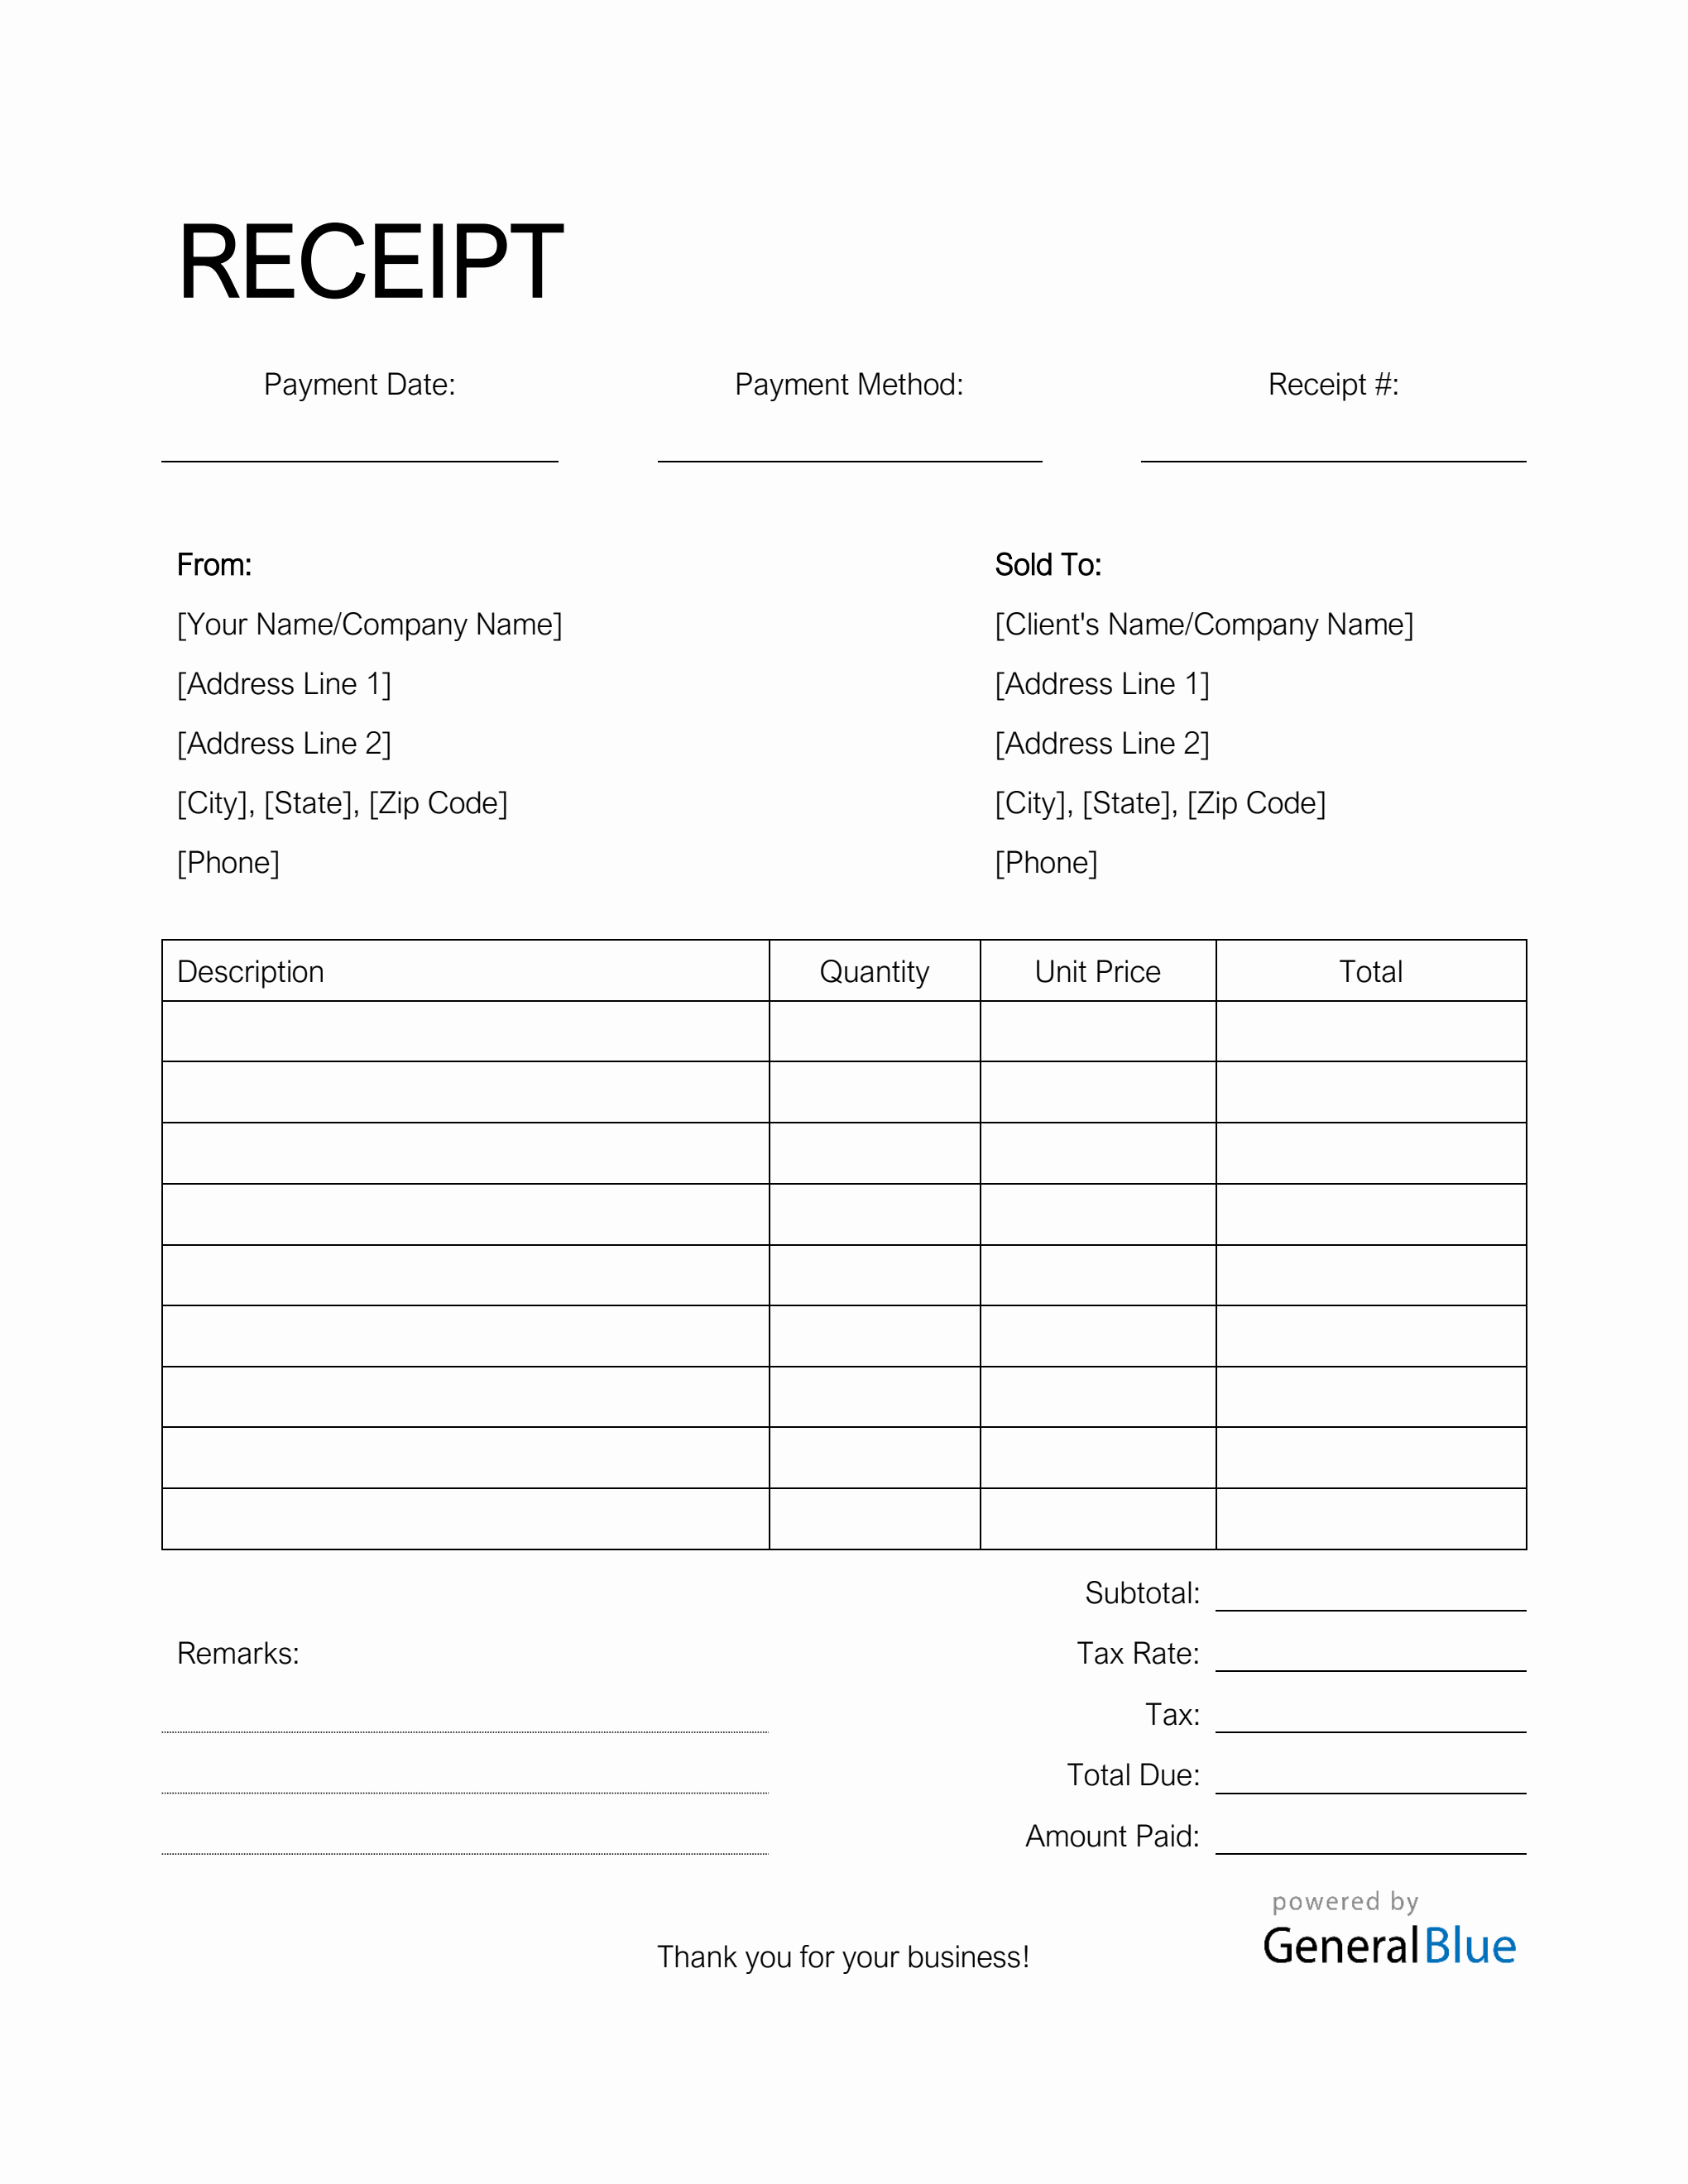 blank-receipt-template-in-word-simple